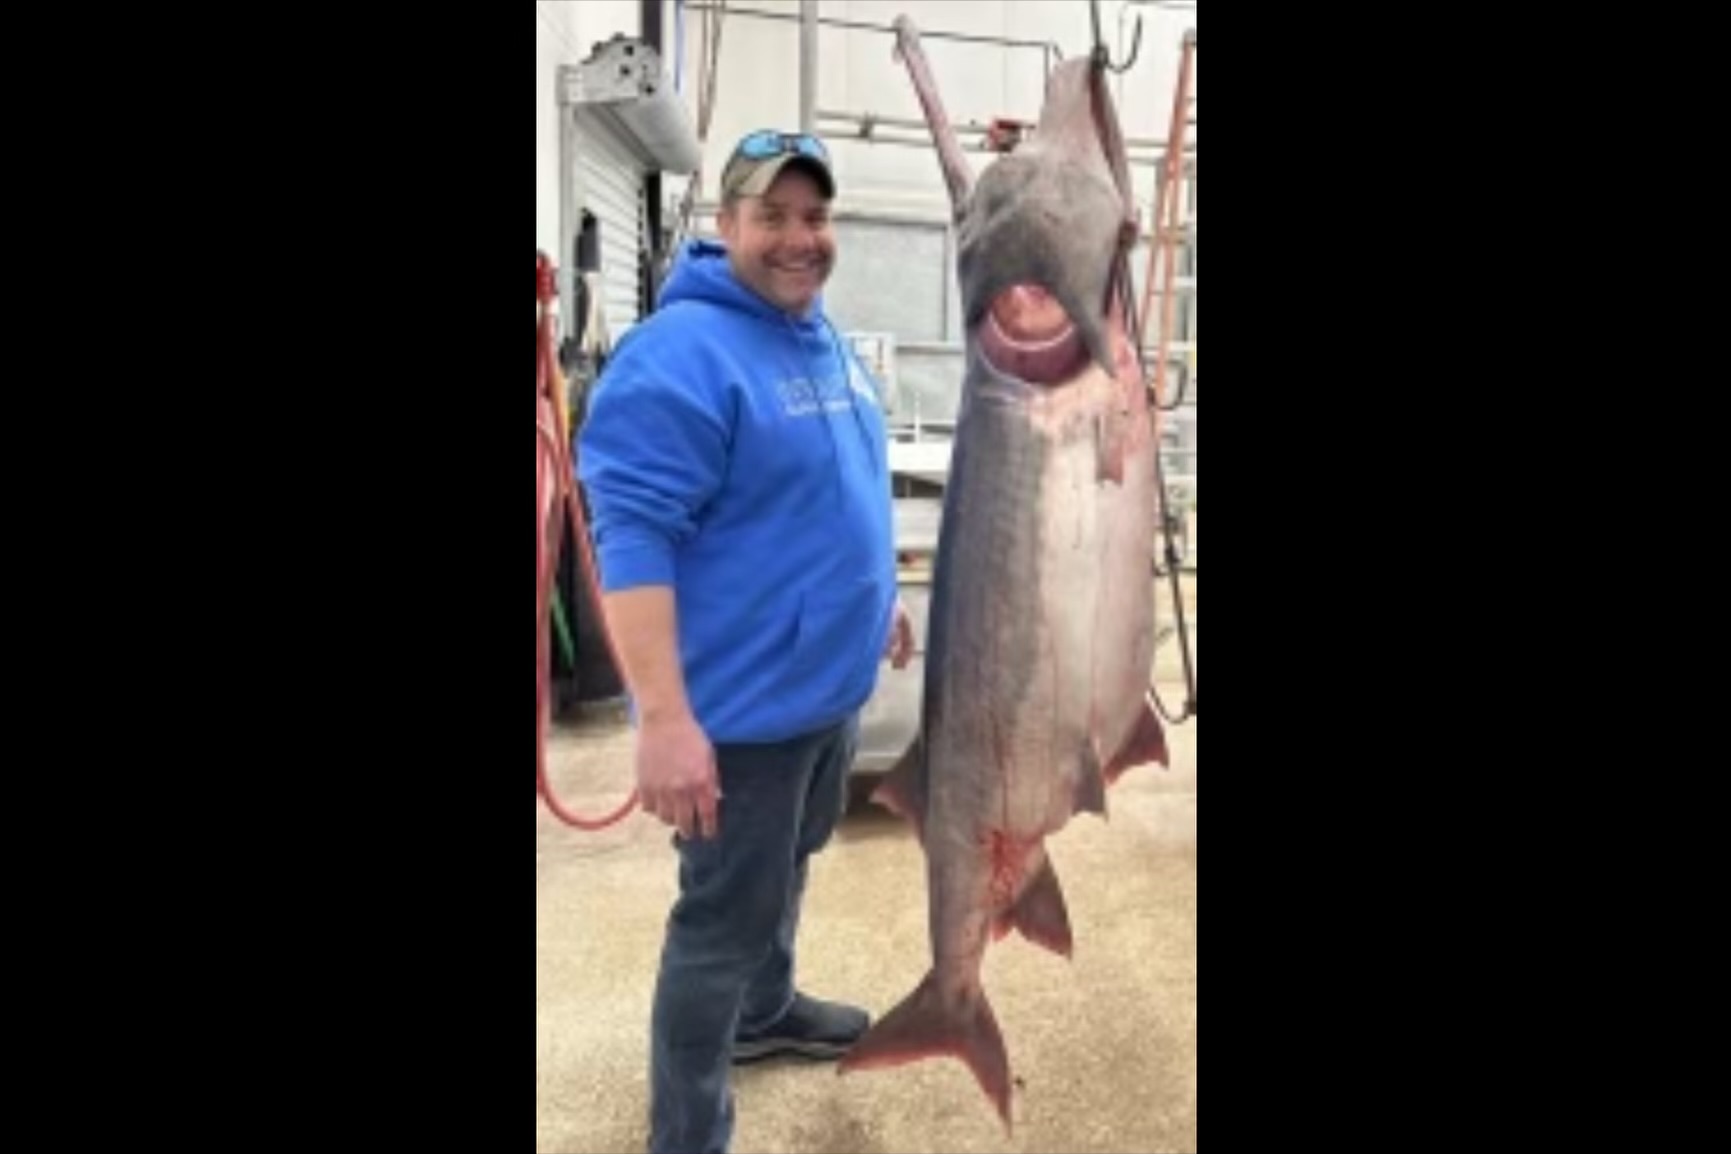 Beginner's luck: Olathe man snags world-record fish